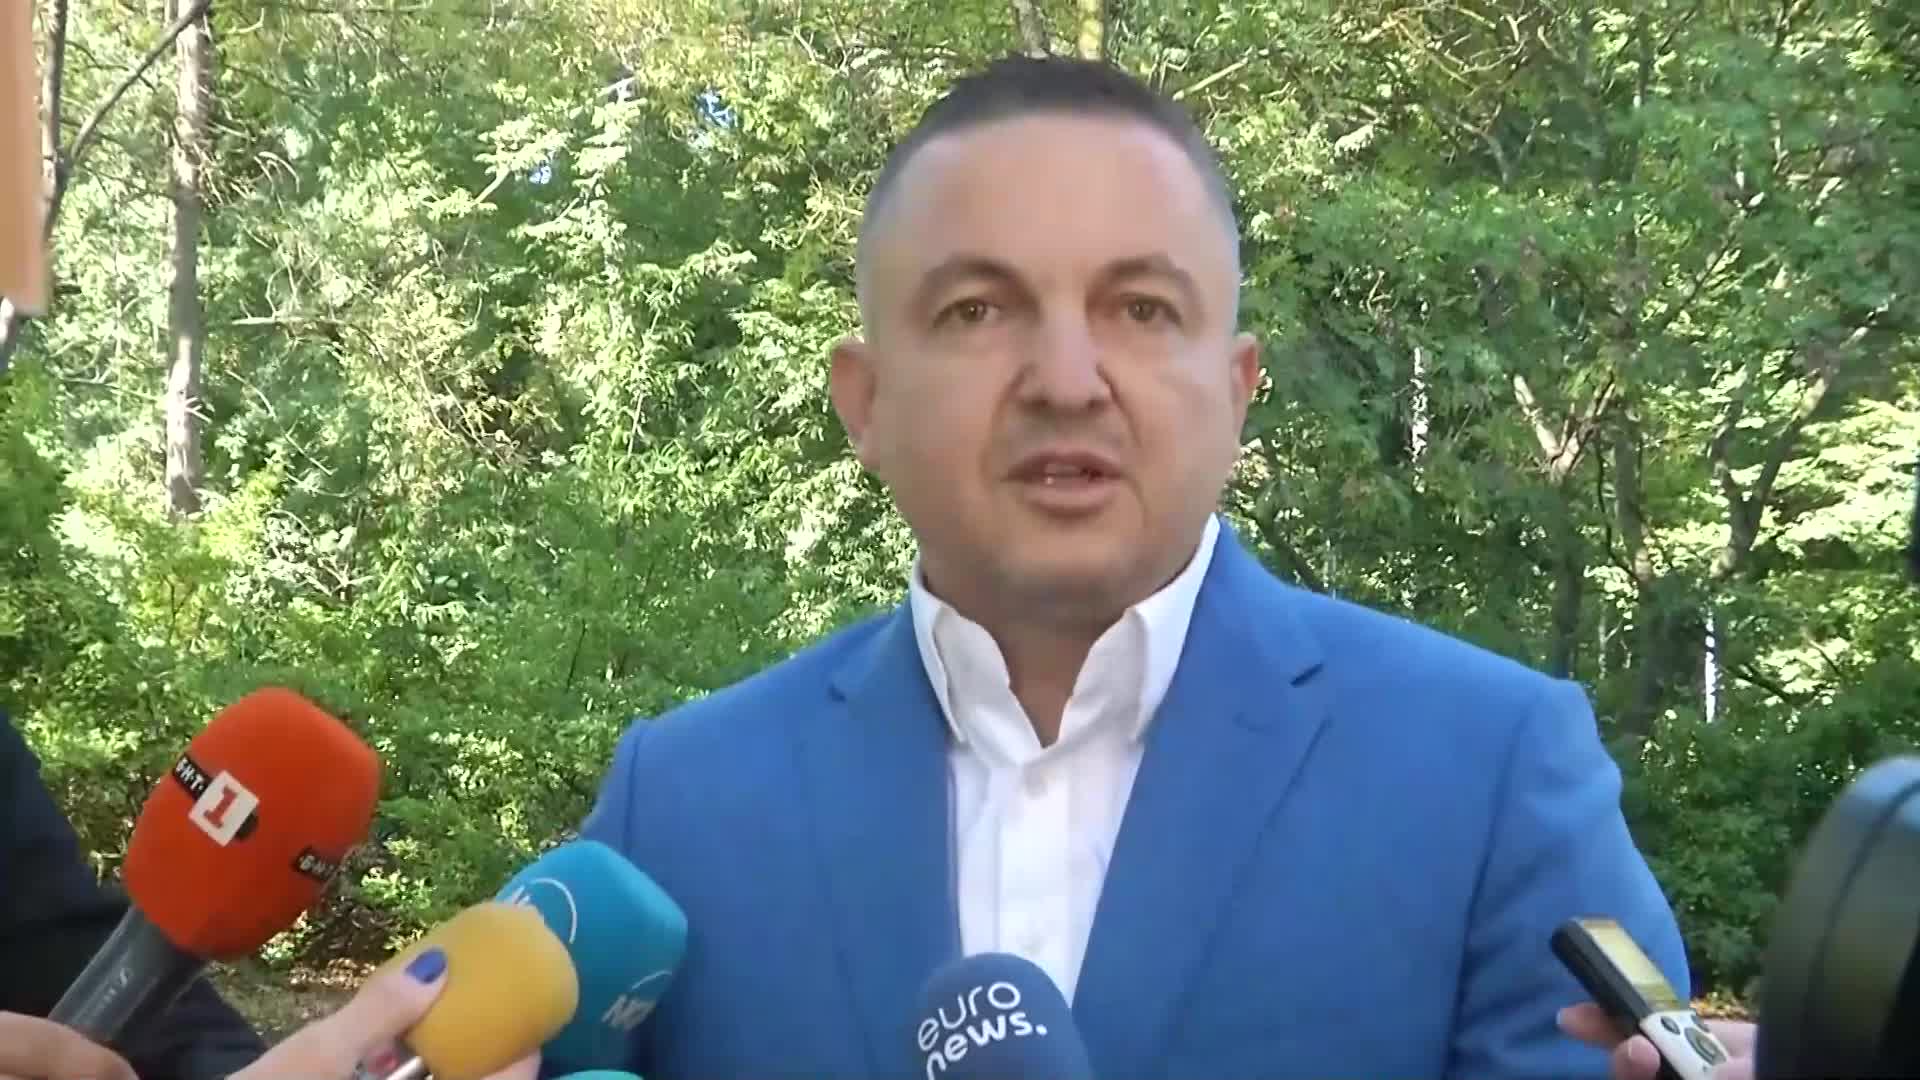 Иван Портних: Гласувах за Варна, за развитието на града